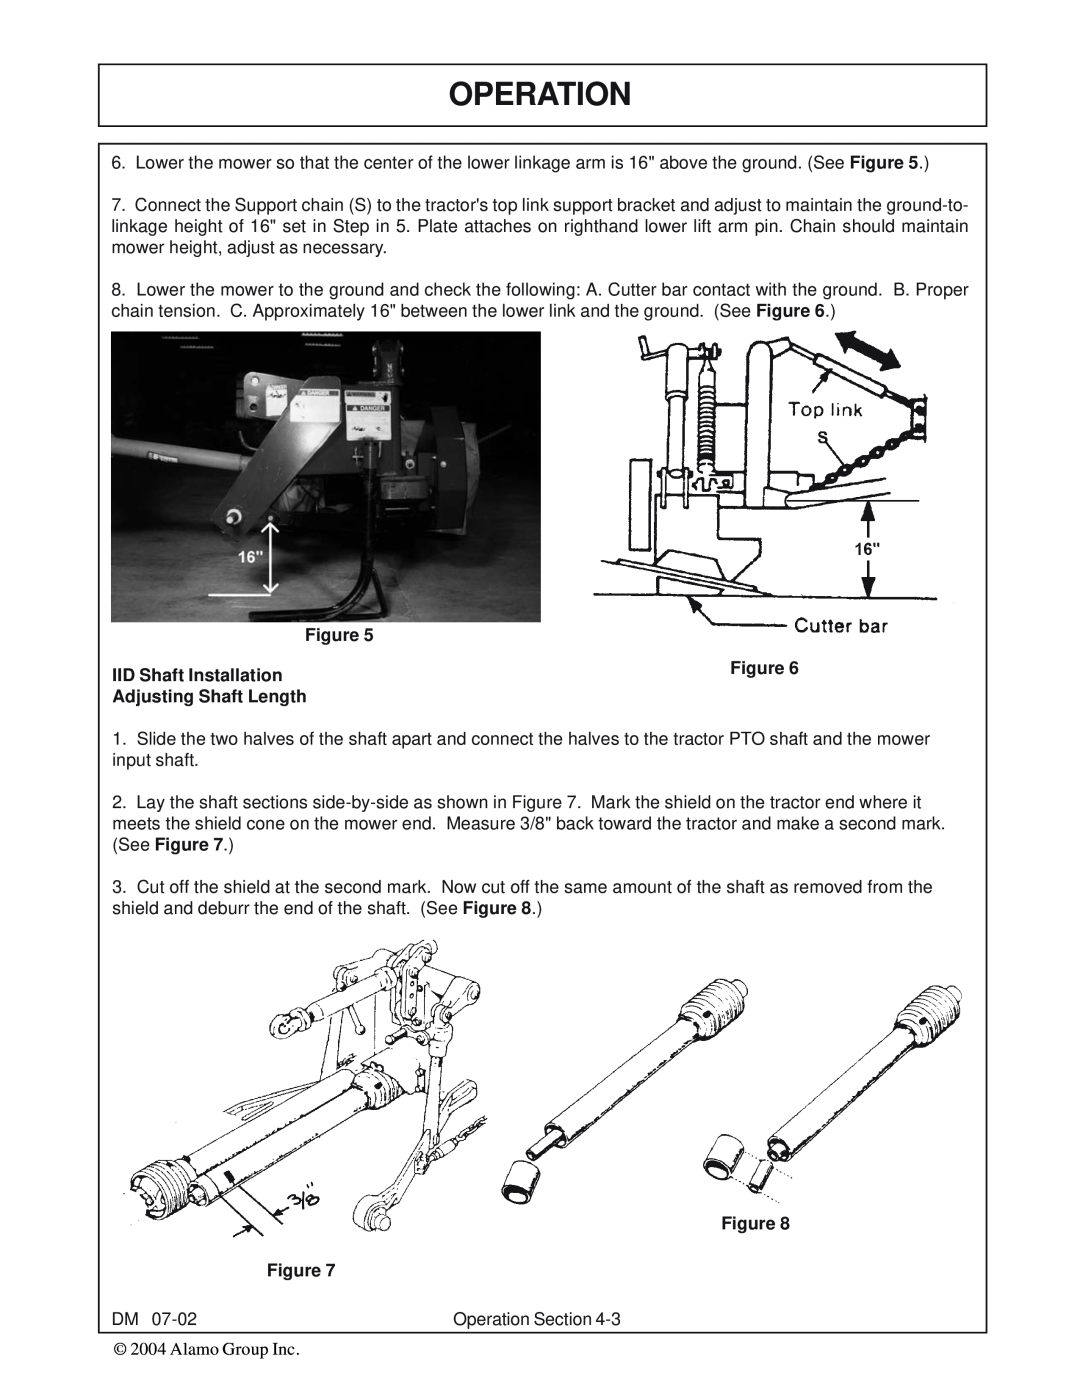 Servis-Rhino DM112, DM82, DM124, DM95 manual Operation, IID Shaft Installation, Adjusting Shaft Length, Figure Figure 